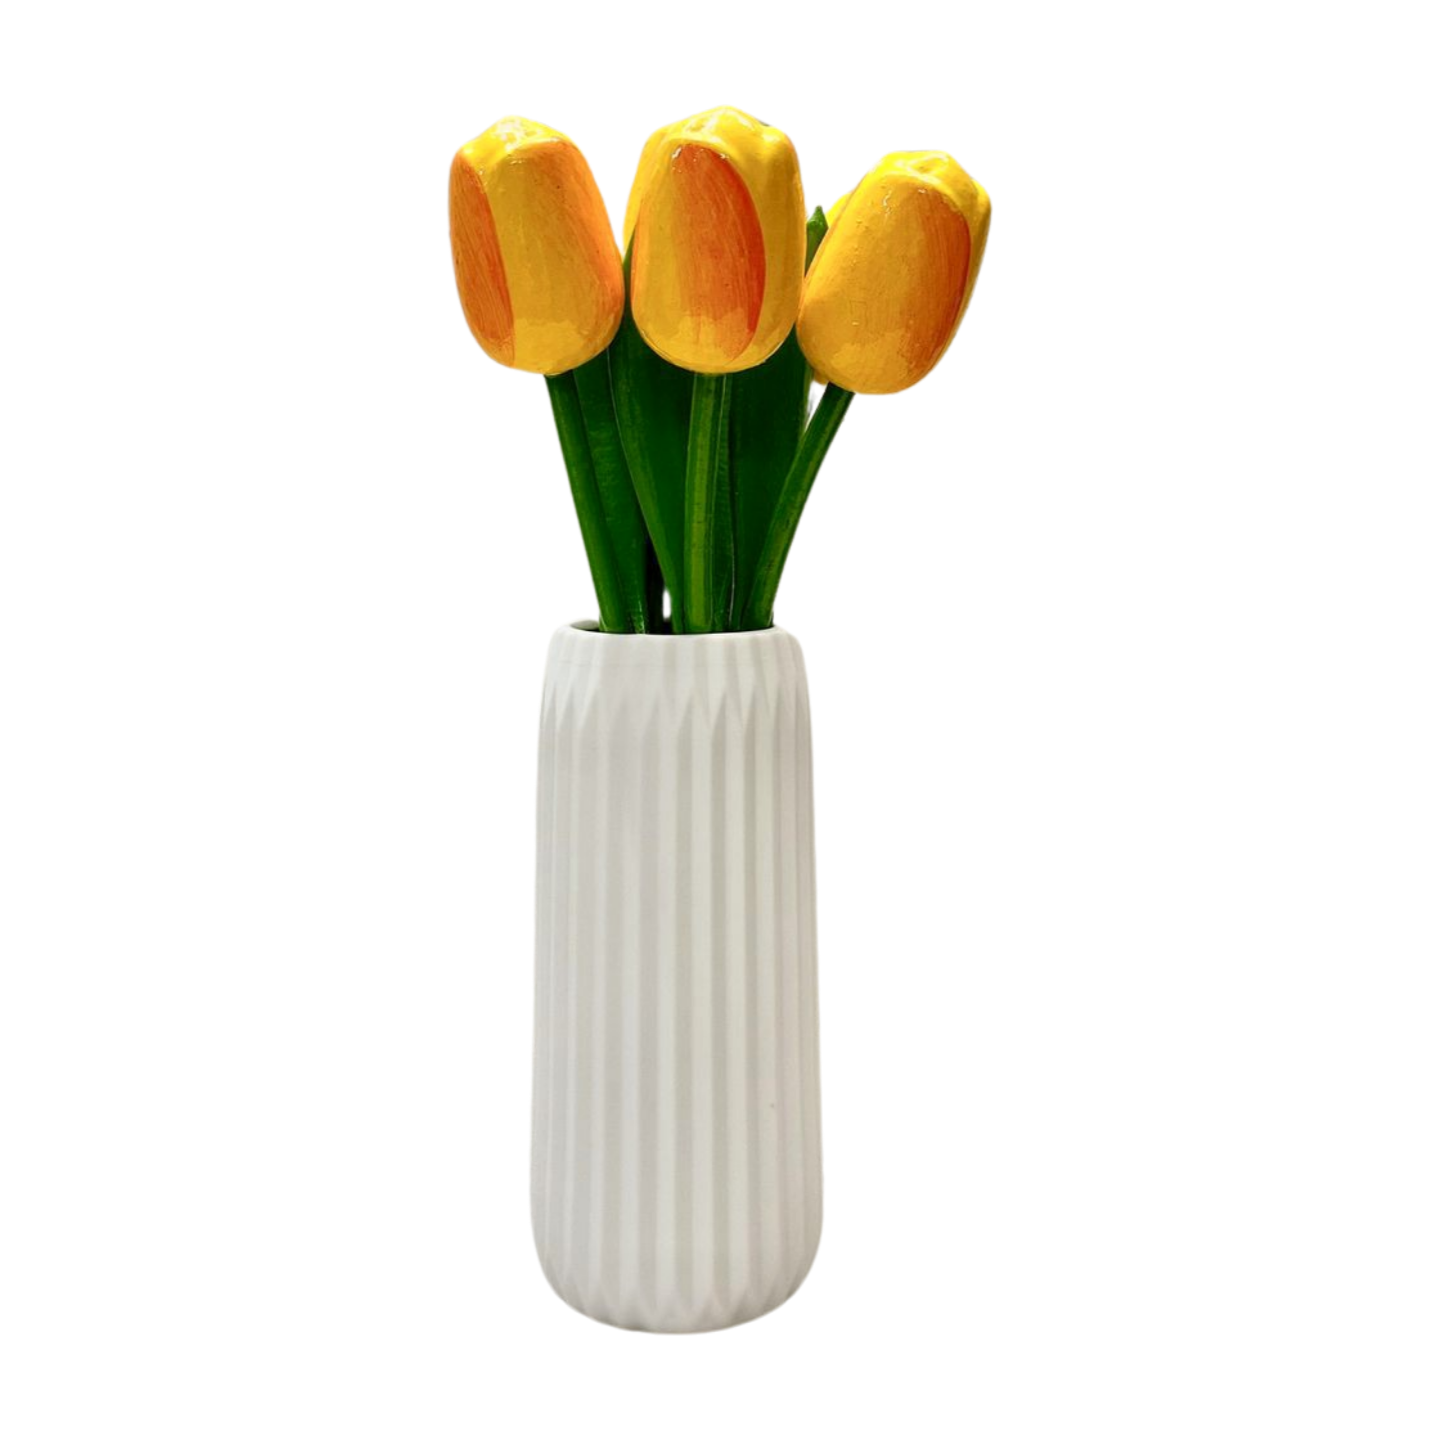 Wooden Dutch tulips in yellow